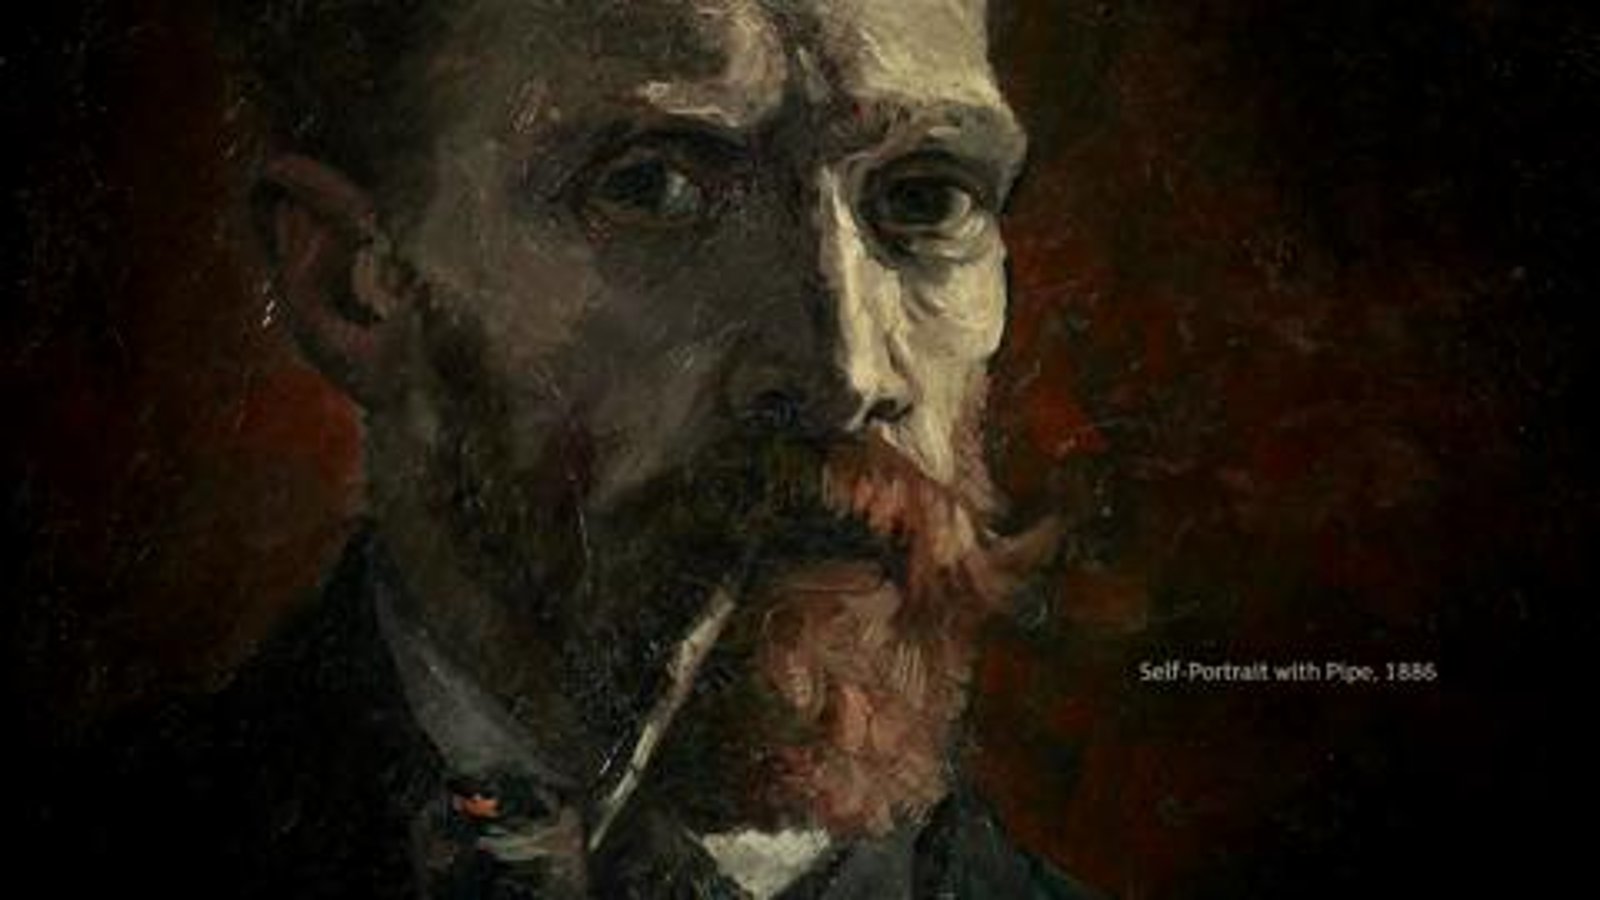 Exhibition on Screen - Van Gogh